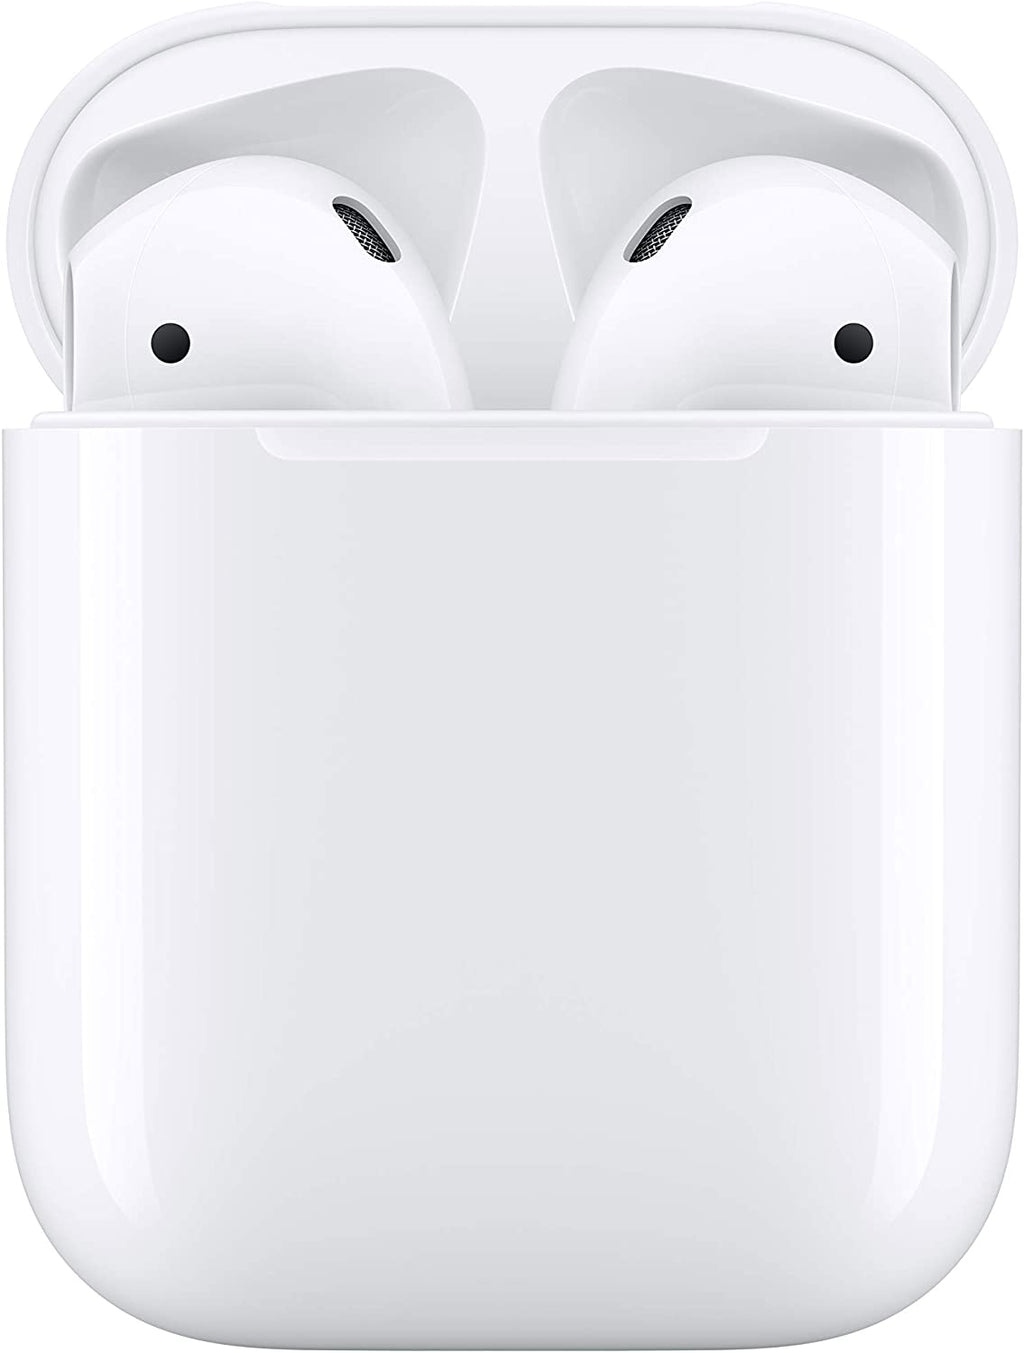 WM6 Apple AirPods w/Charging Case - Refurbished